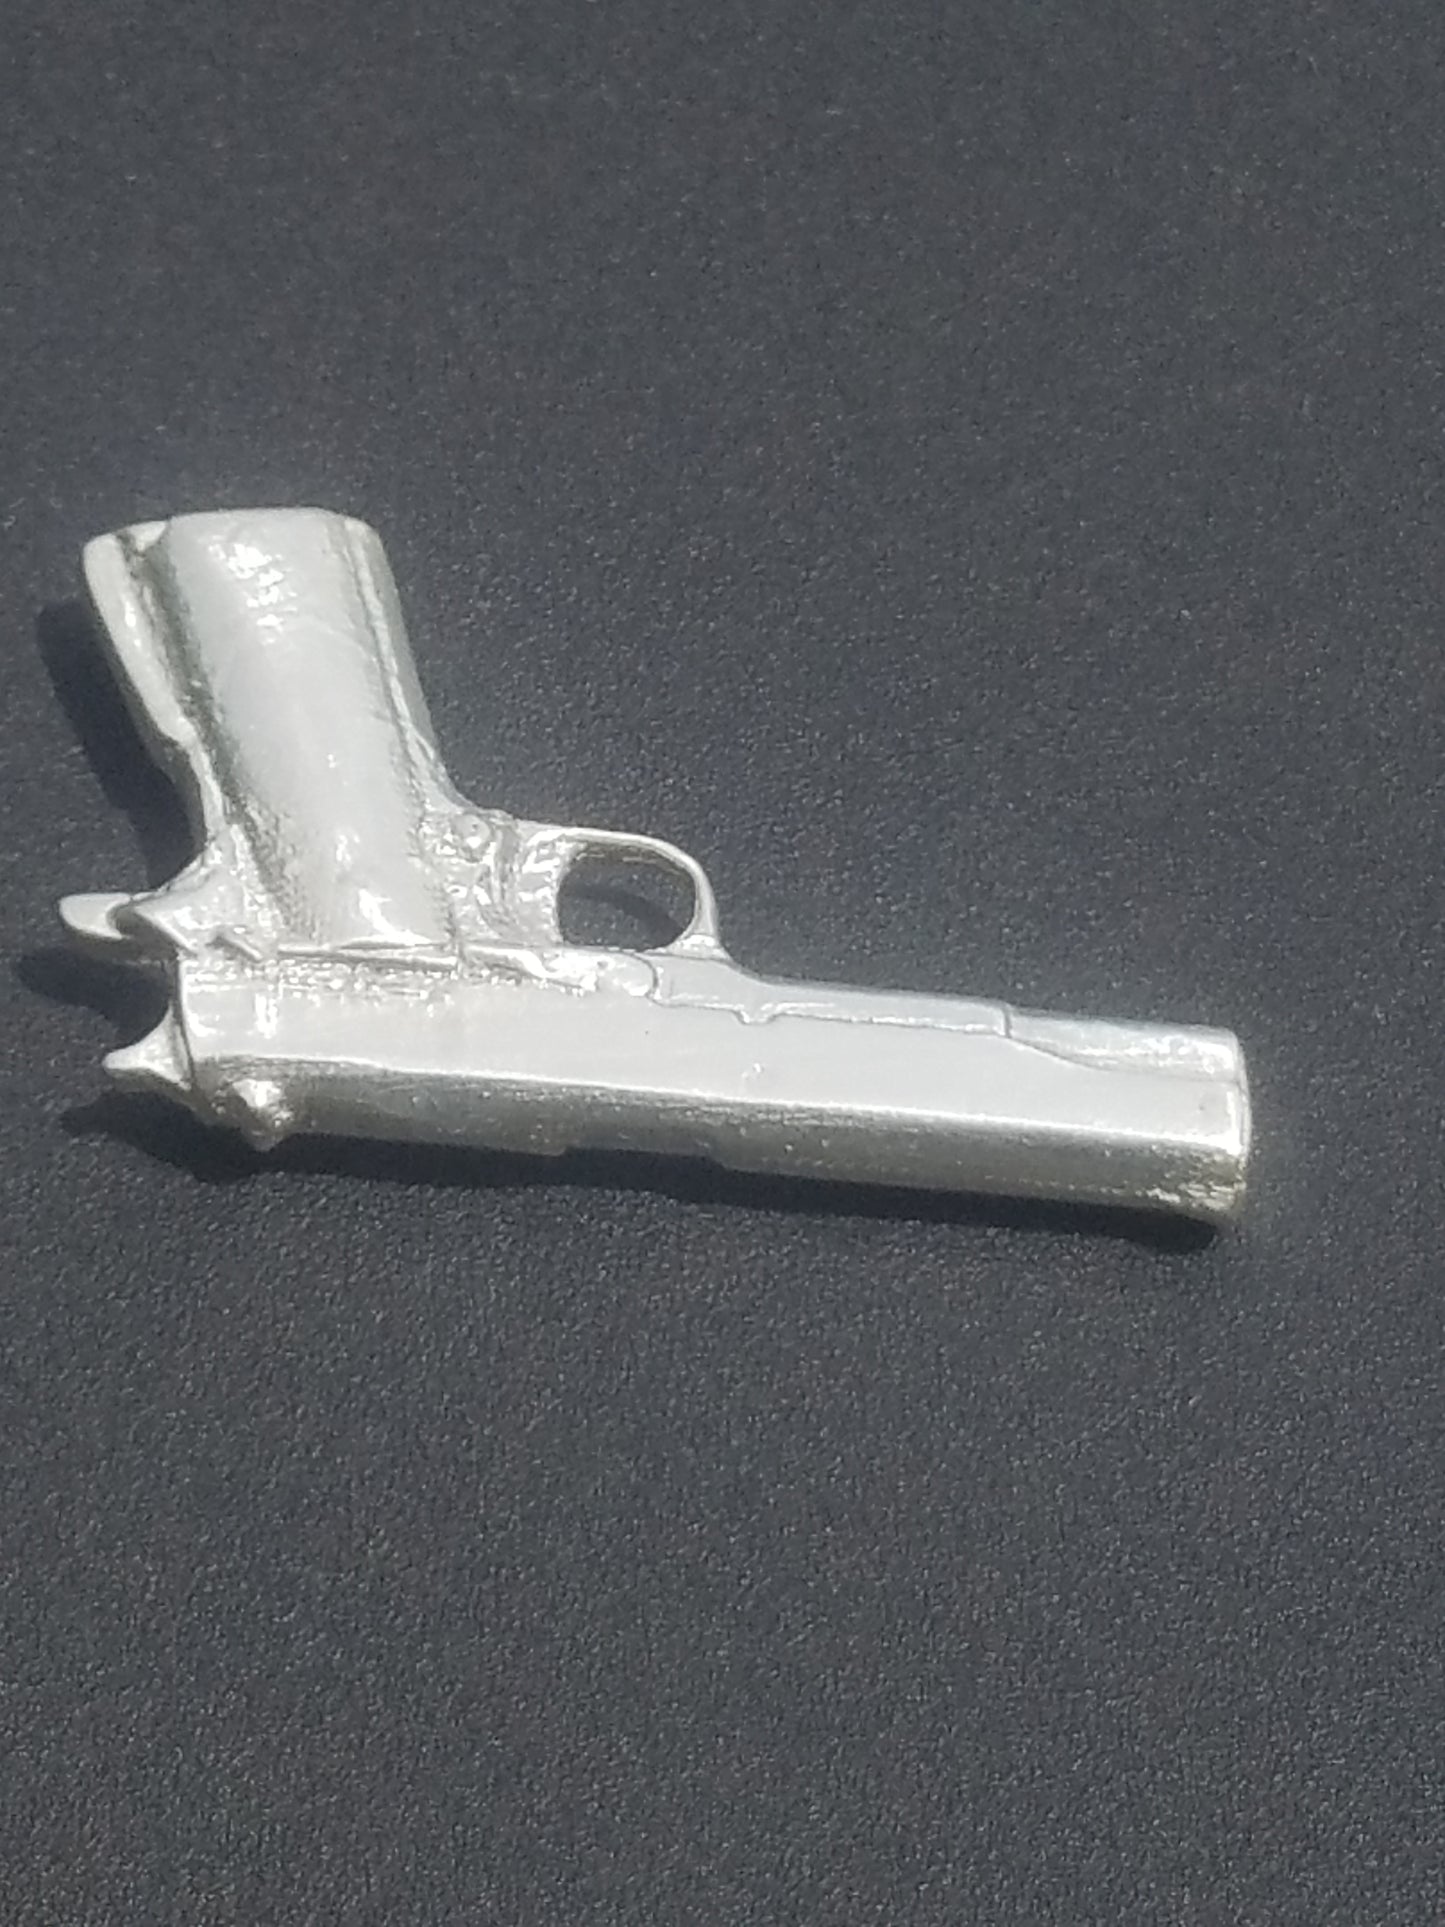 1911 Colt Gun Miniature 999 Fine Silver Hand Poured Bullion 1776 Mint